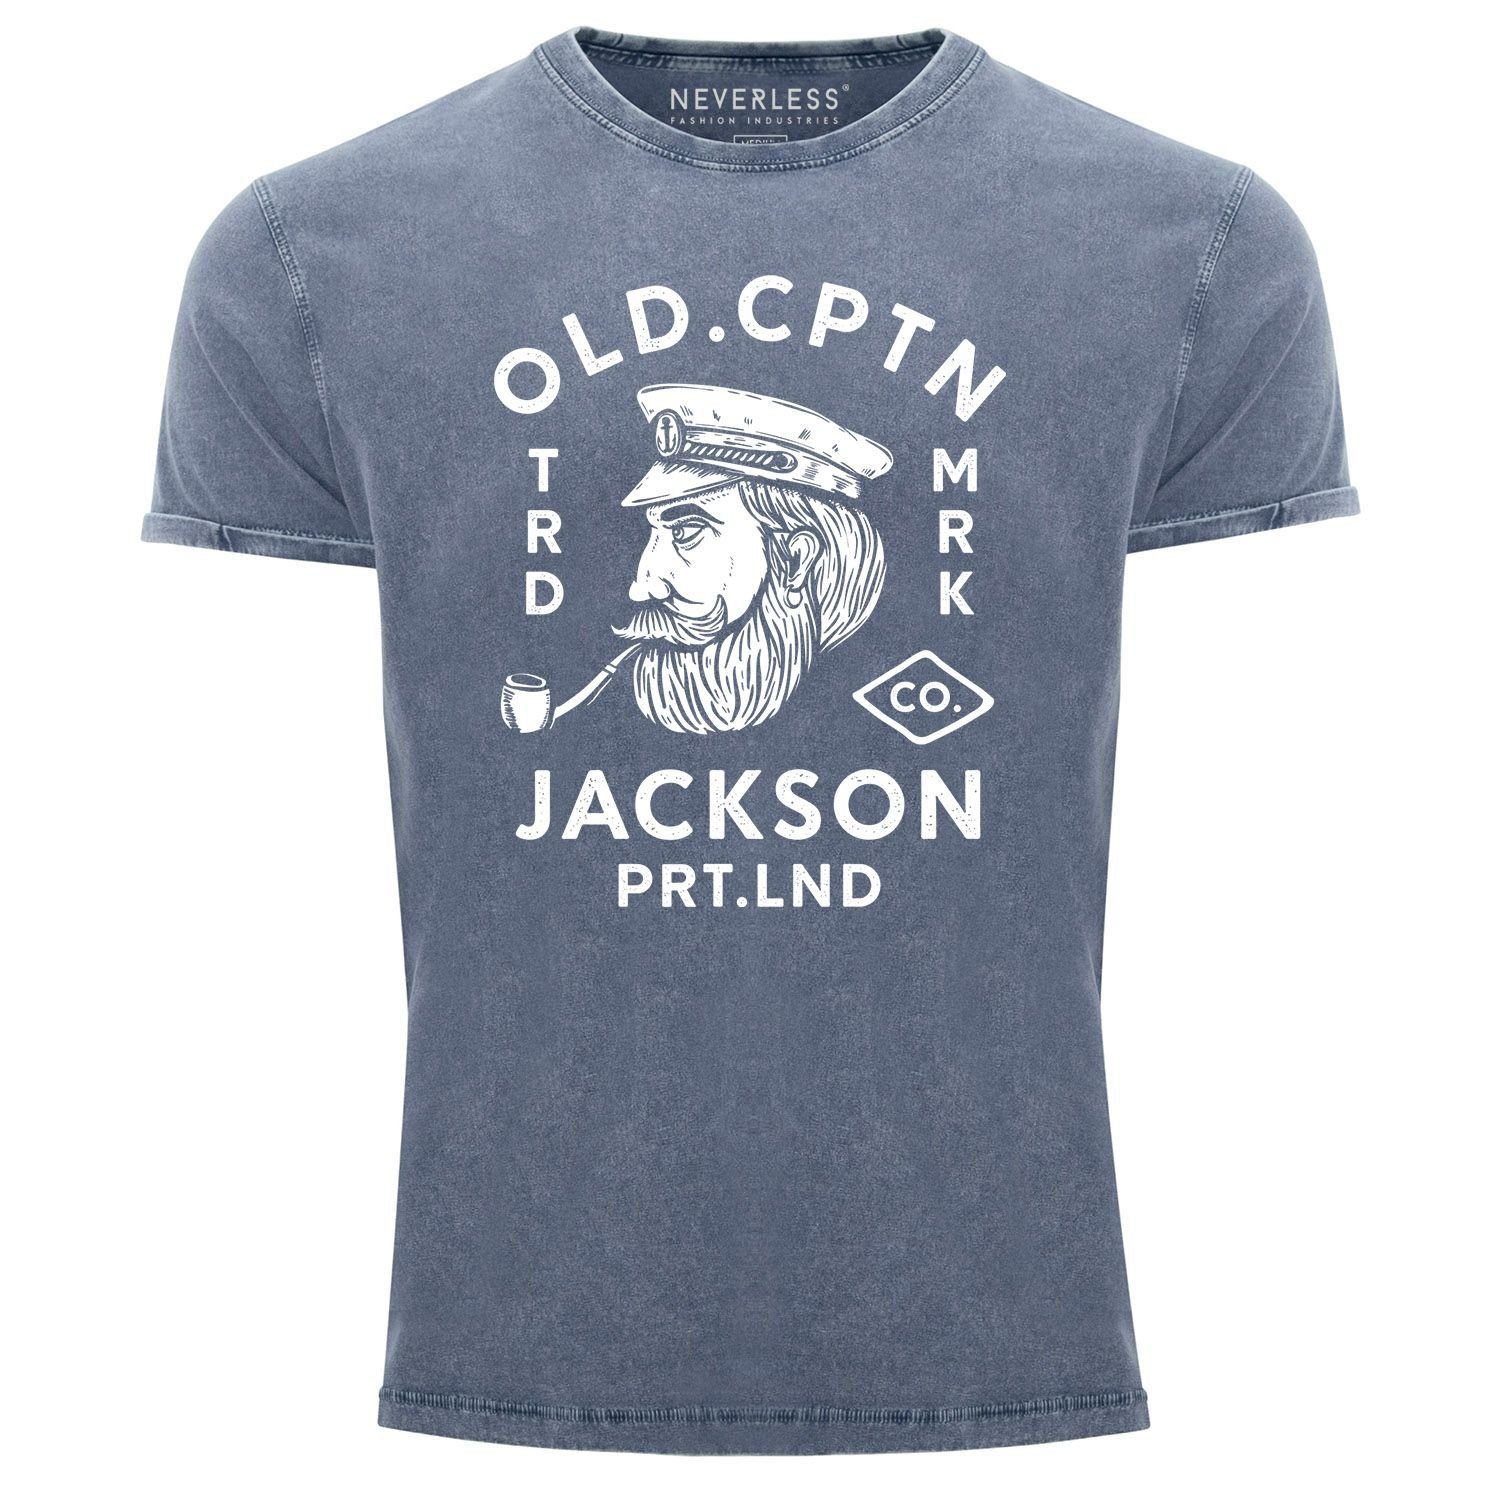 Neverless Print-Shirt Herren Vintage Shirt Used Print Neverless® Fit Old Cptn Kapitän Retro Look Jackson Printshirt Aufdruck Slim mit Motiv blau